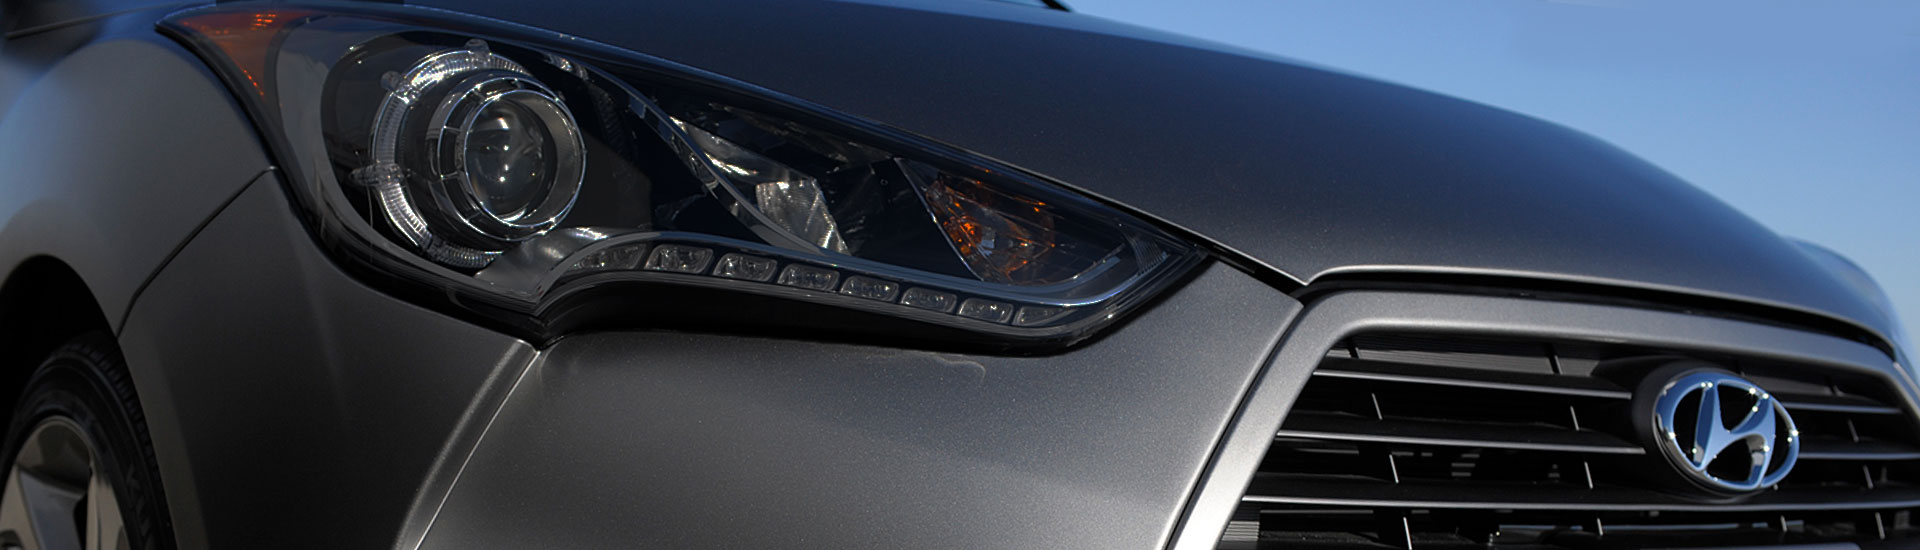 Hyundai Headlight Tint Covers